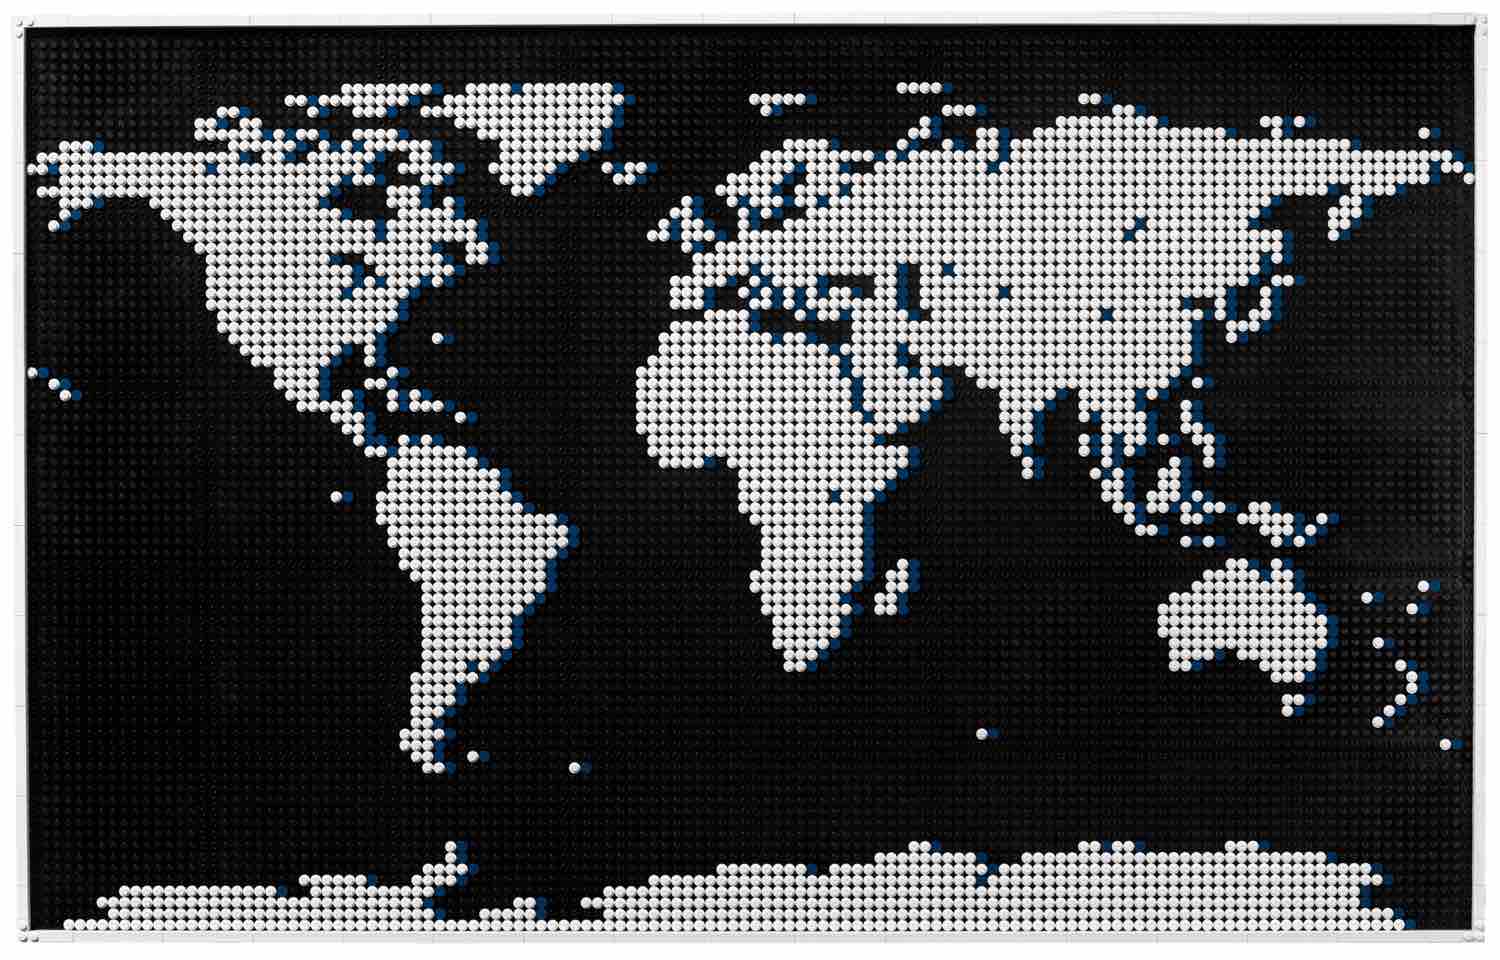 lego-art-world-map-31203-black